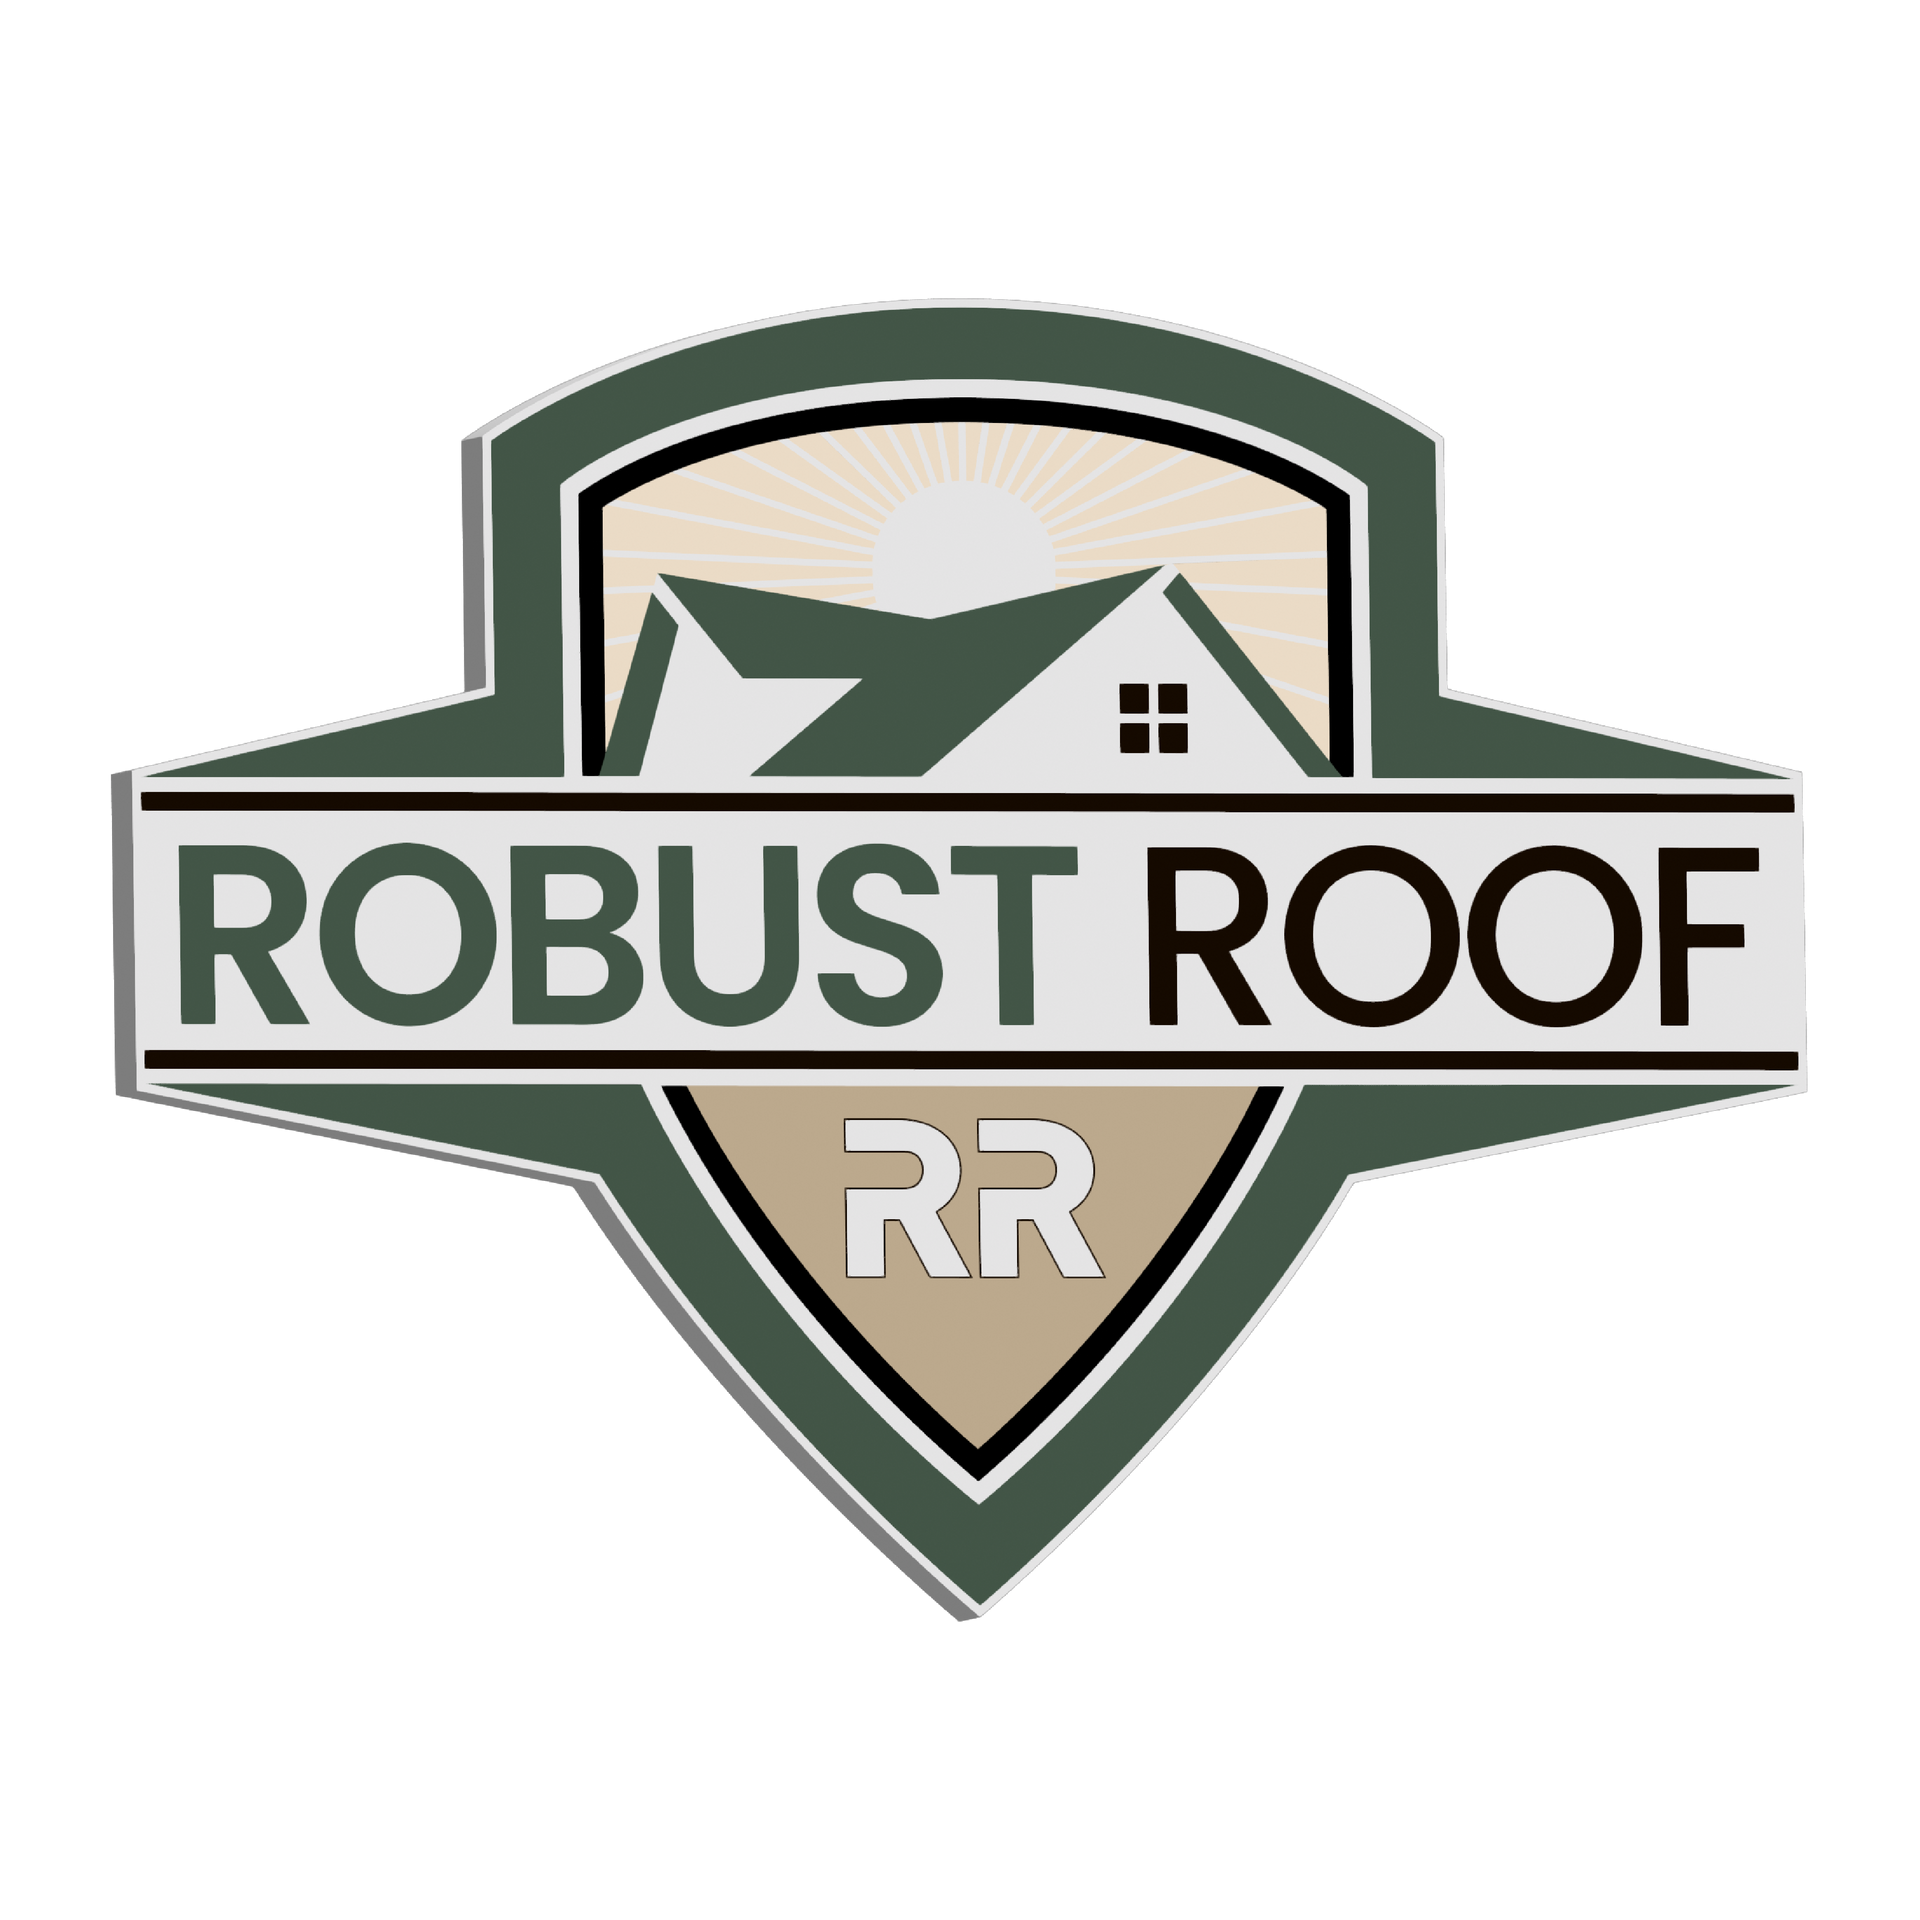 (c) Robustroof.com